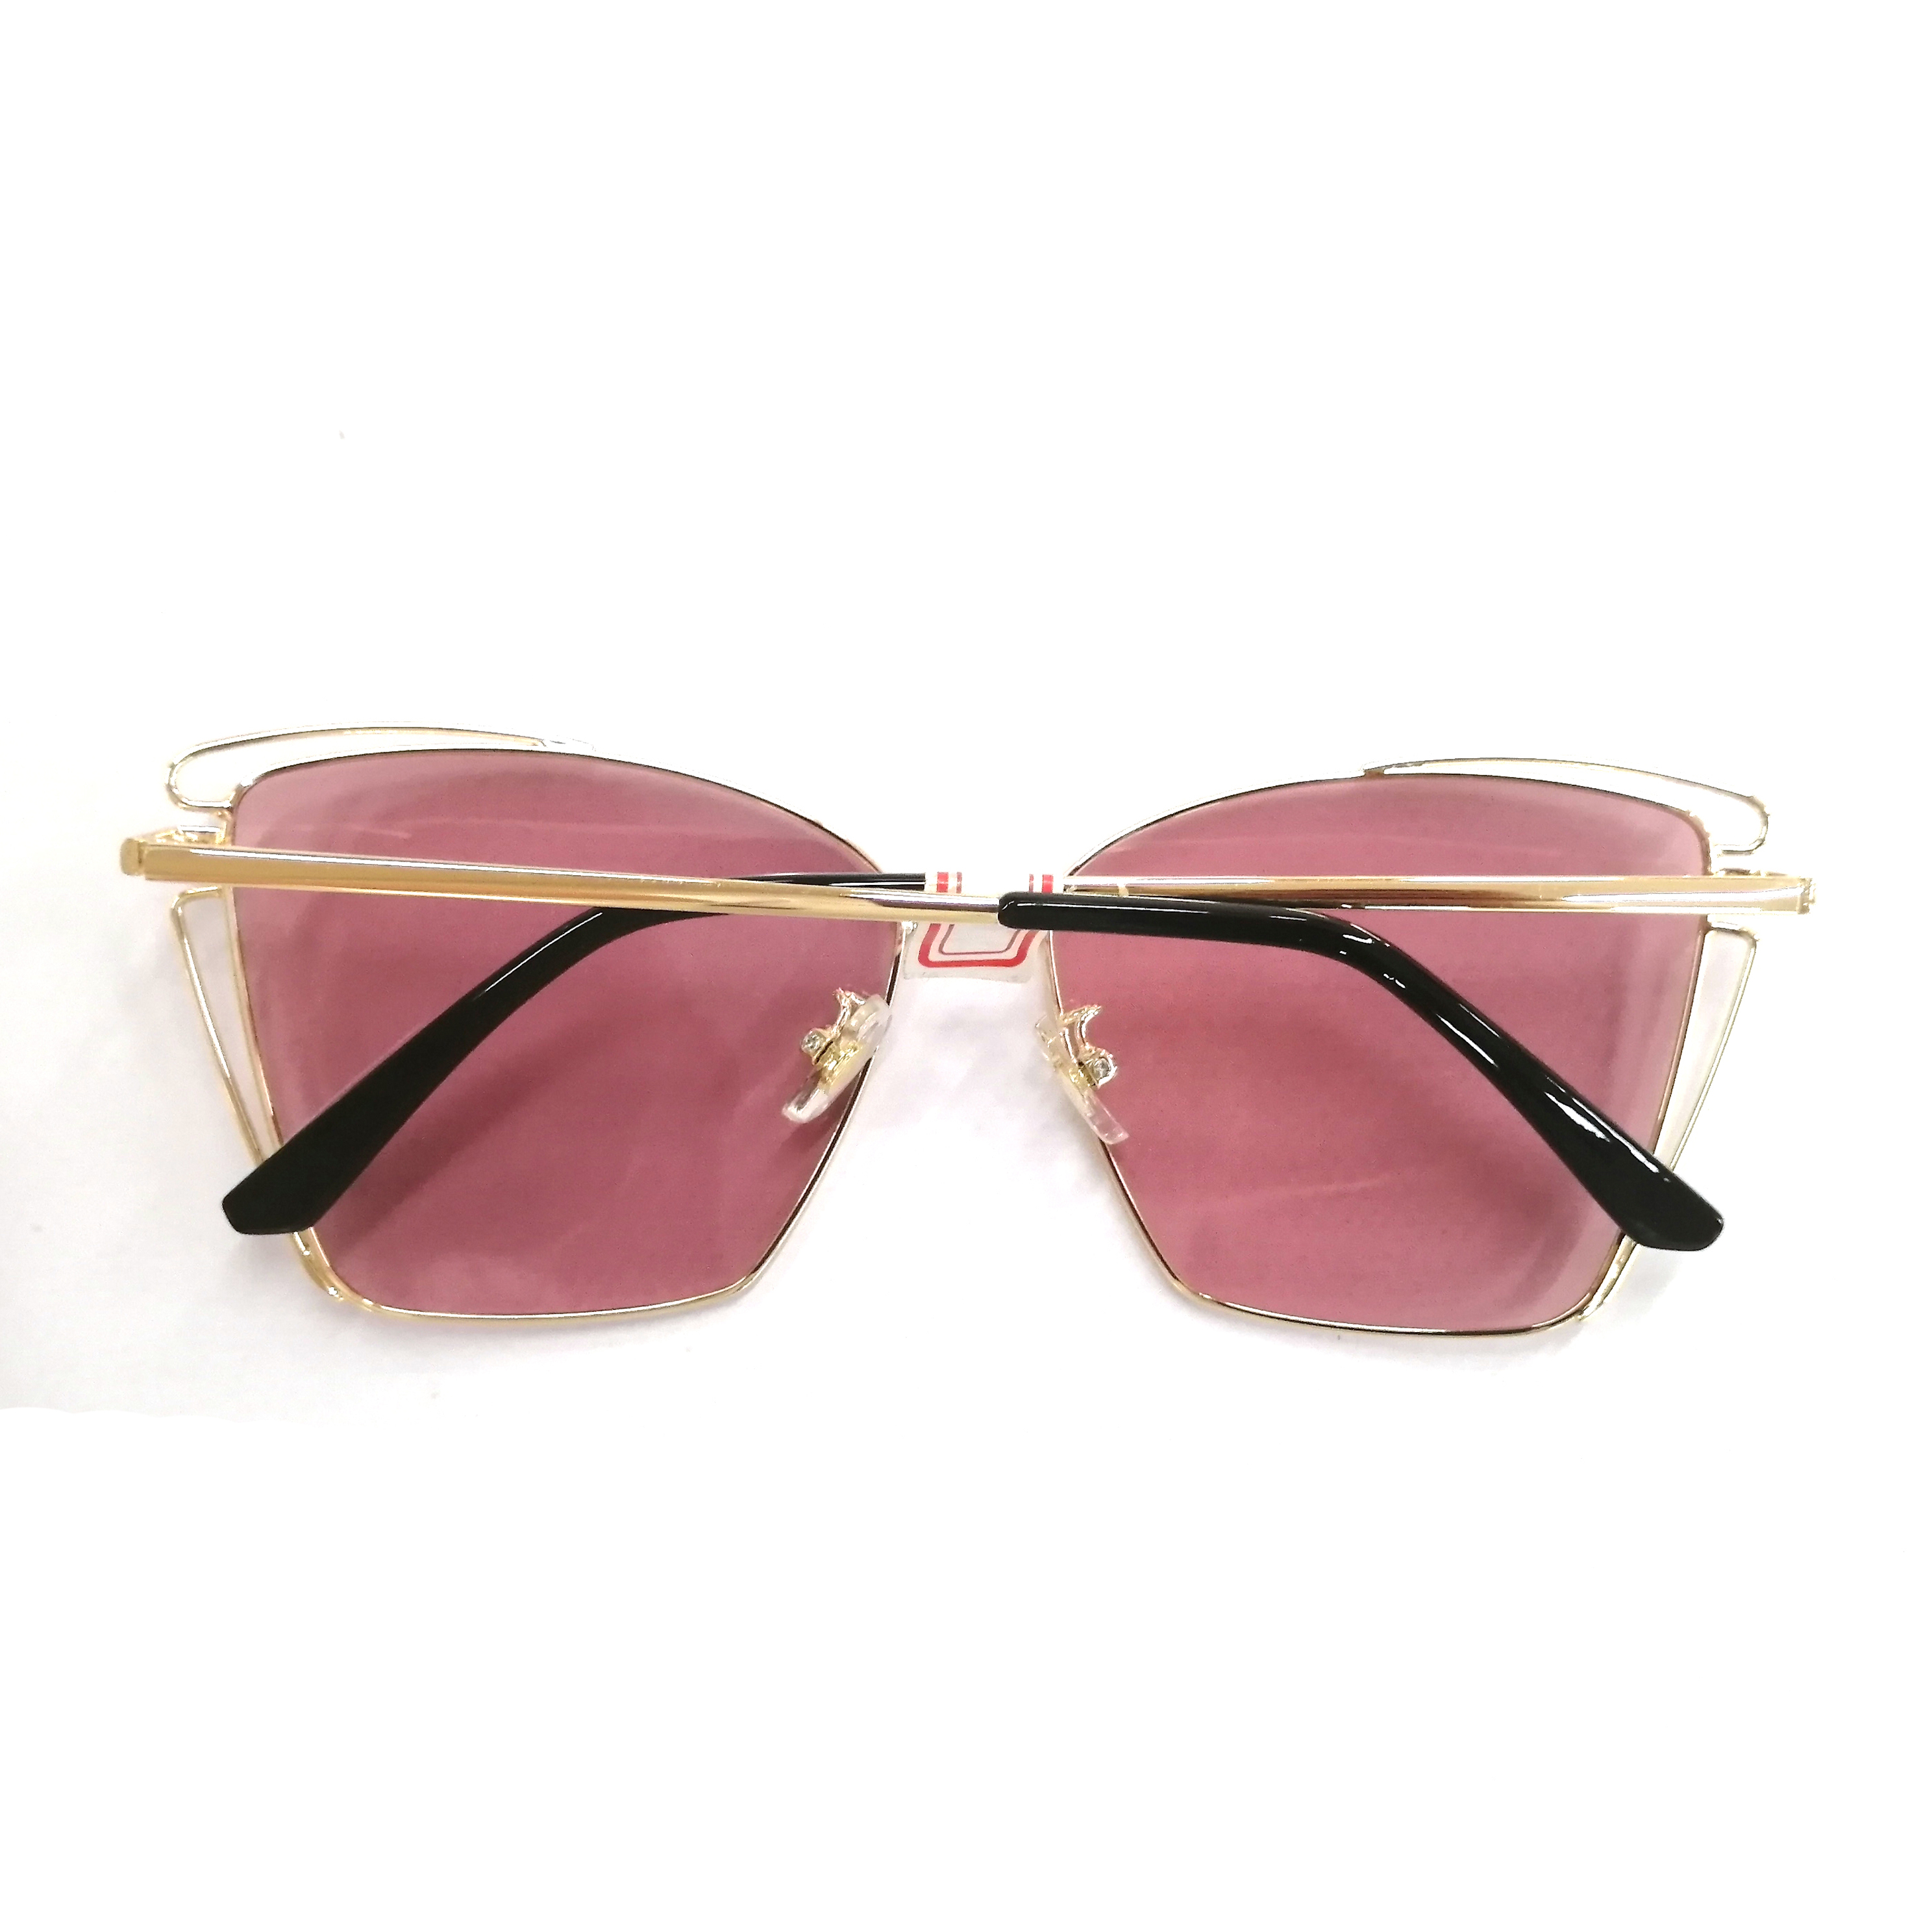 Metal Frame polarized metal sunglasses